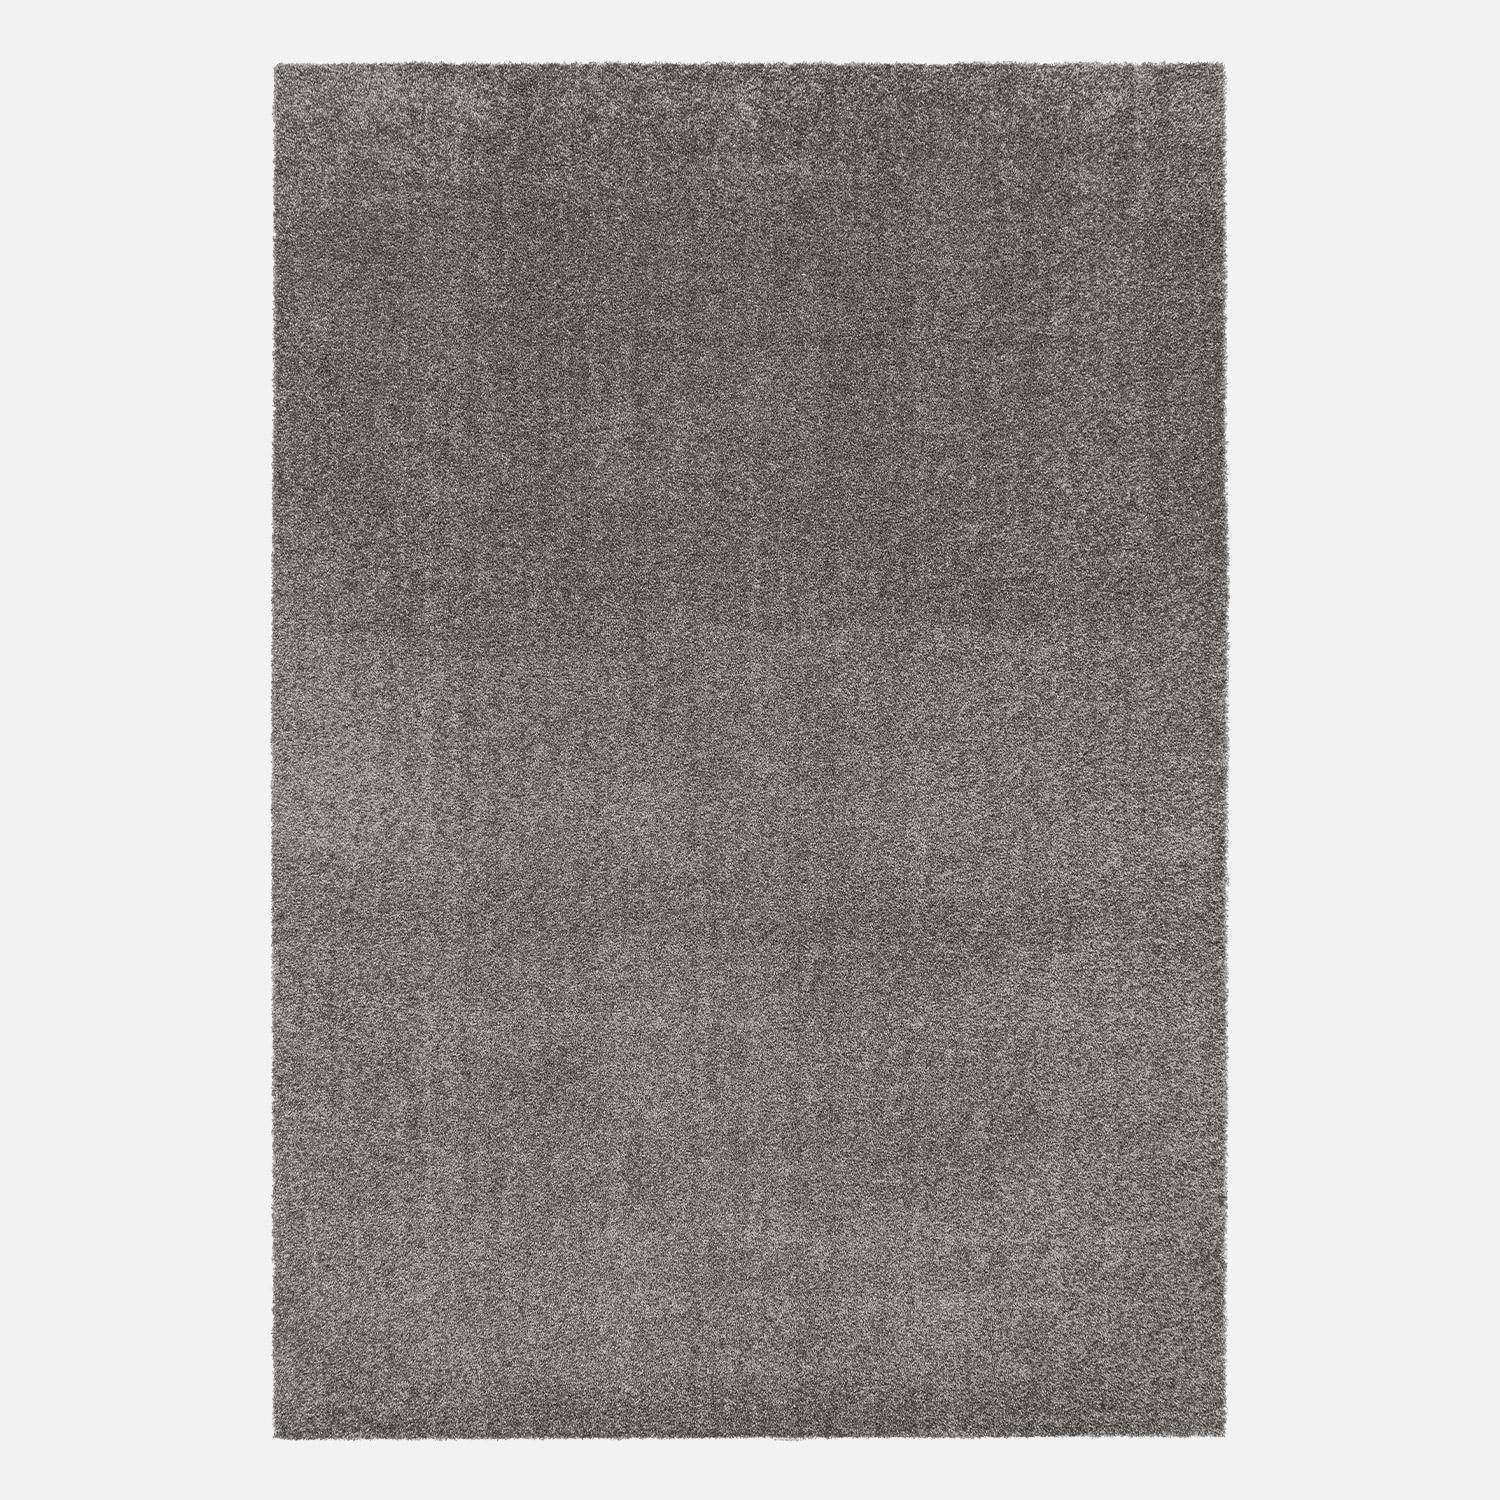 Anthracite grey curly velour interior carpet, Lawrence, 120 x 170 cm Photo4